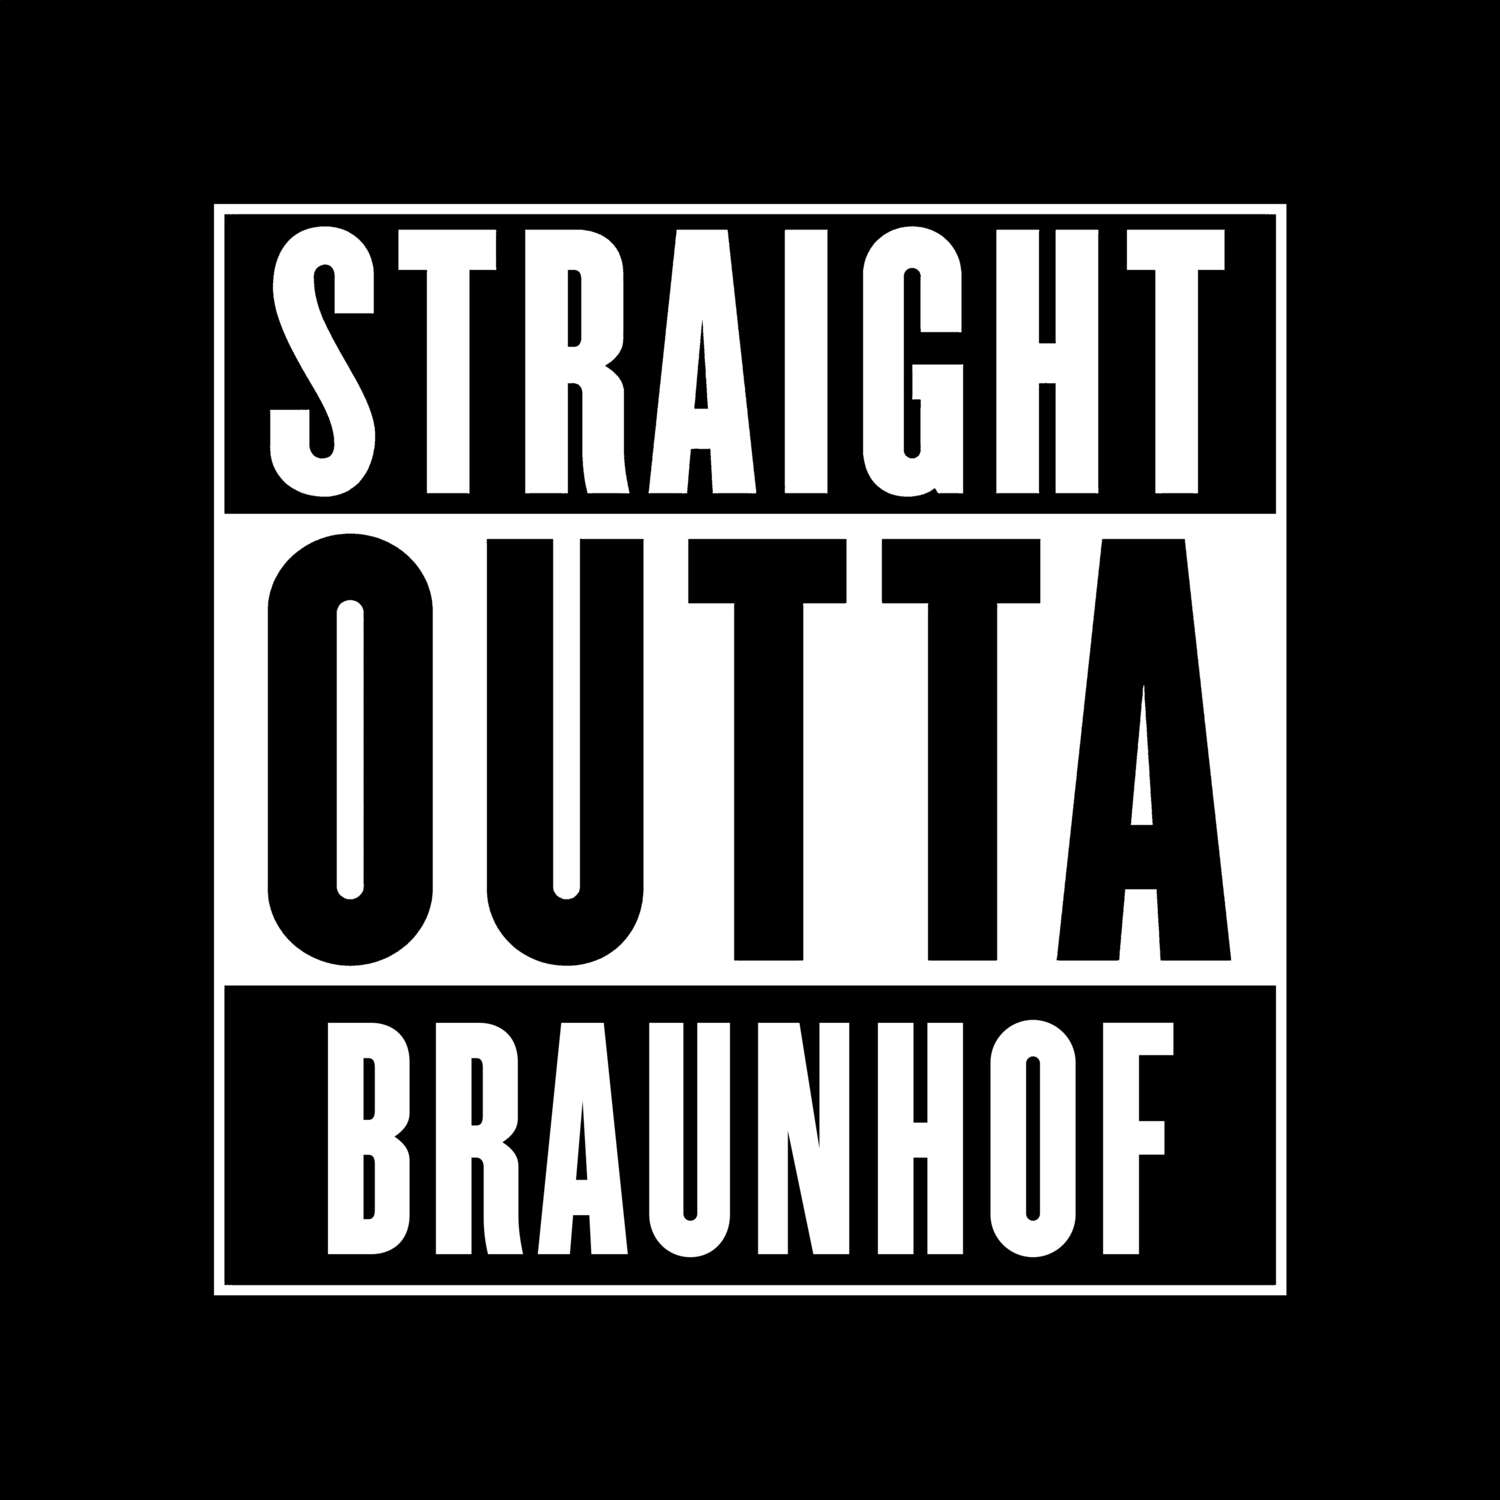 Braunhof T-Shirt »Straight Outta«